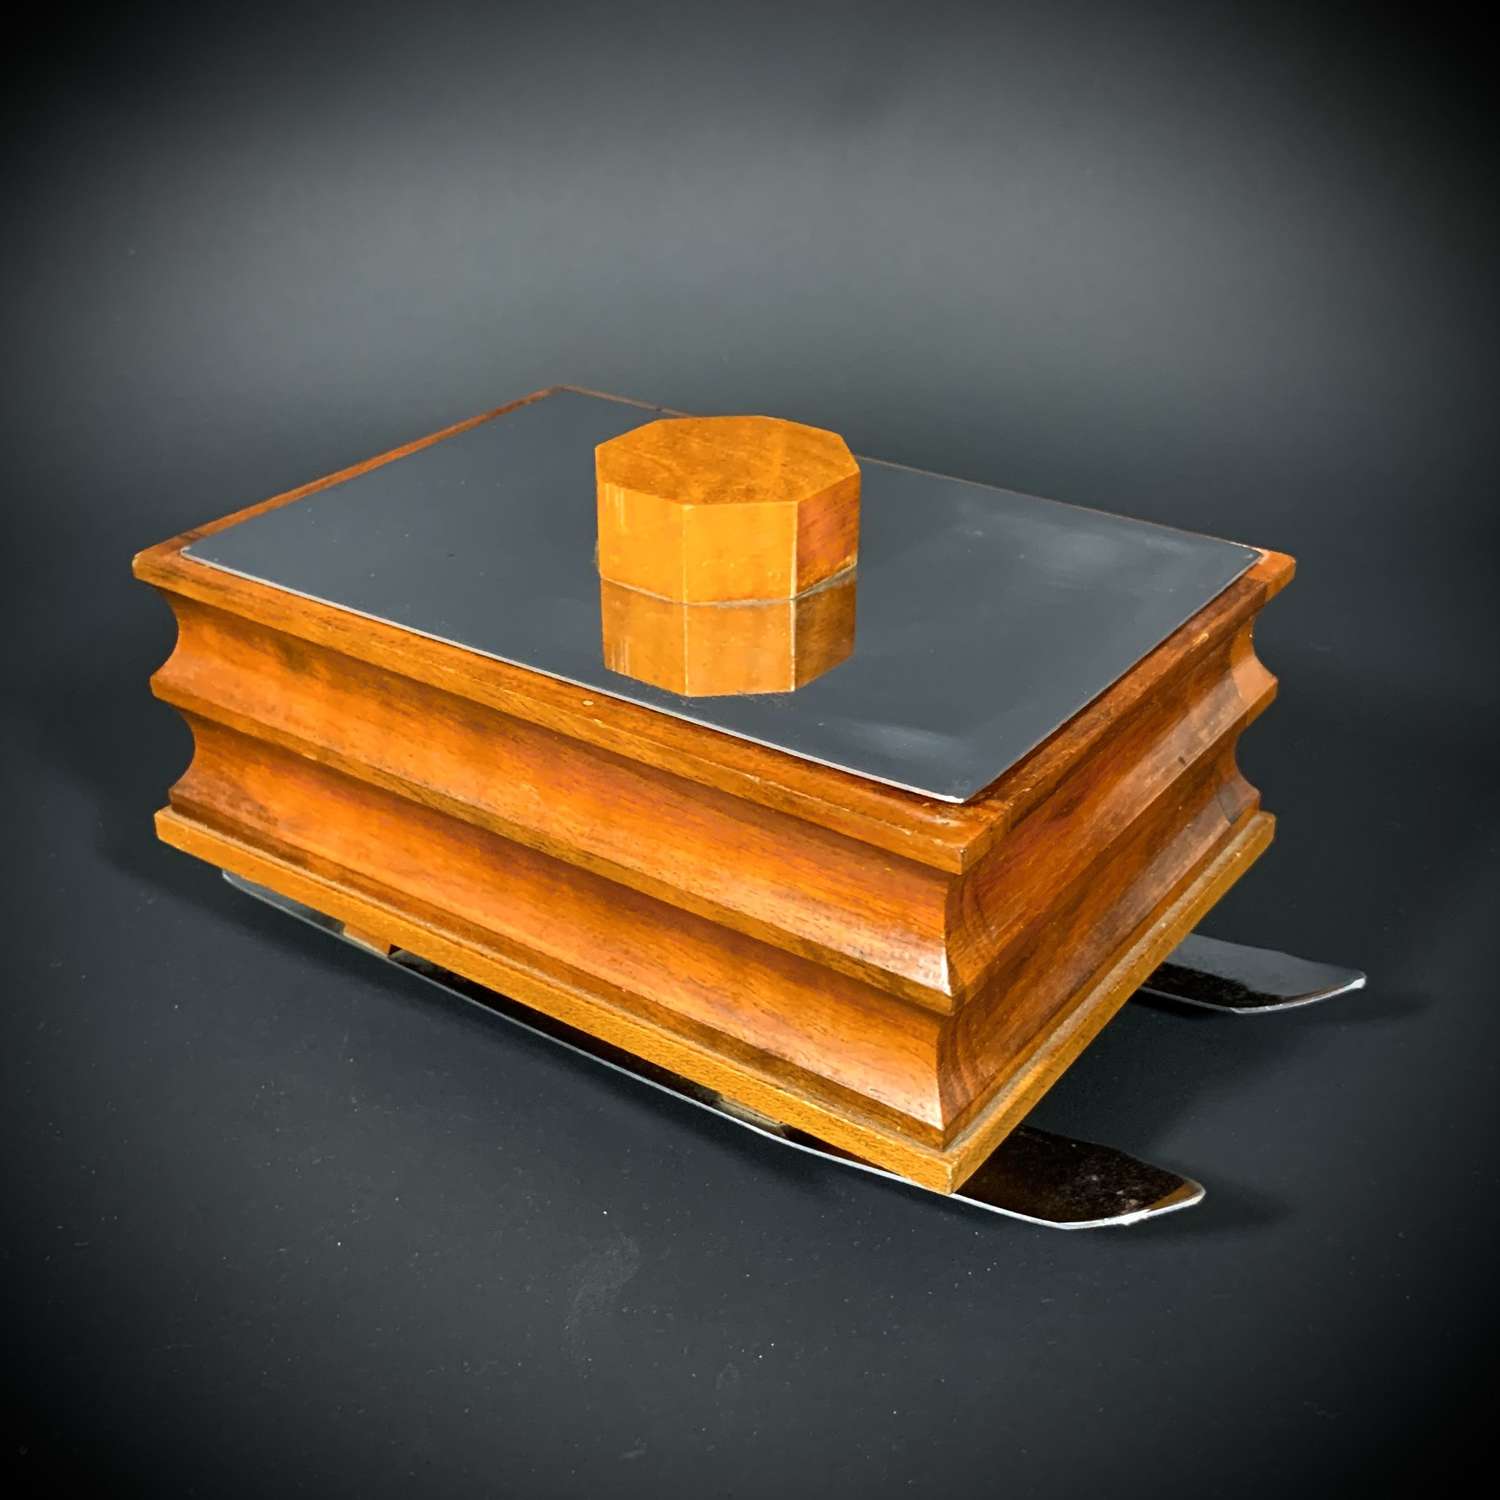 An Art Deco cigar / cigarette box fashioned as a winter sled